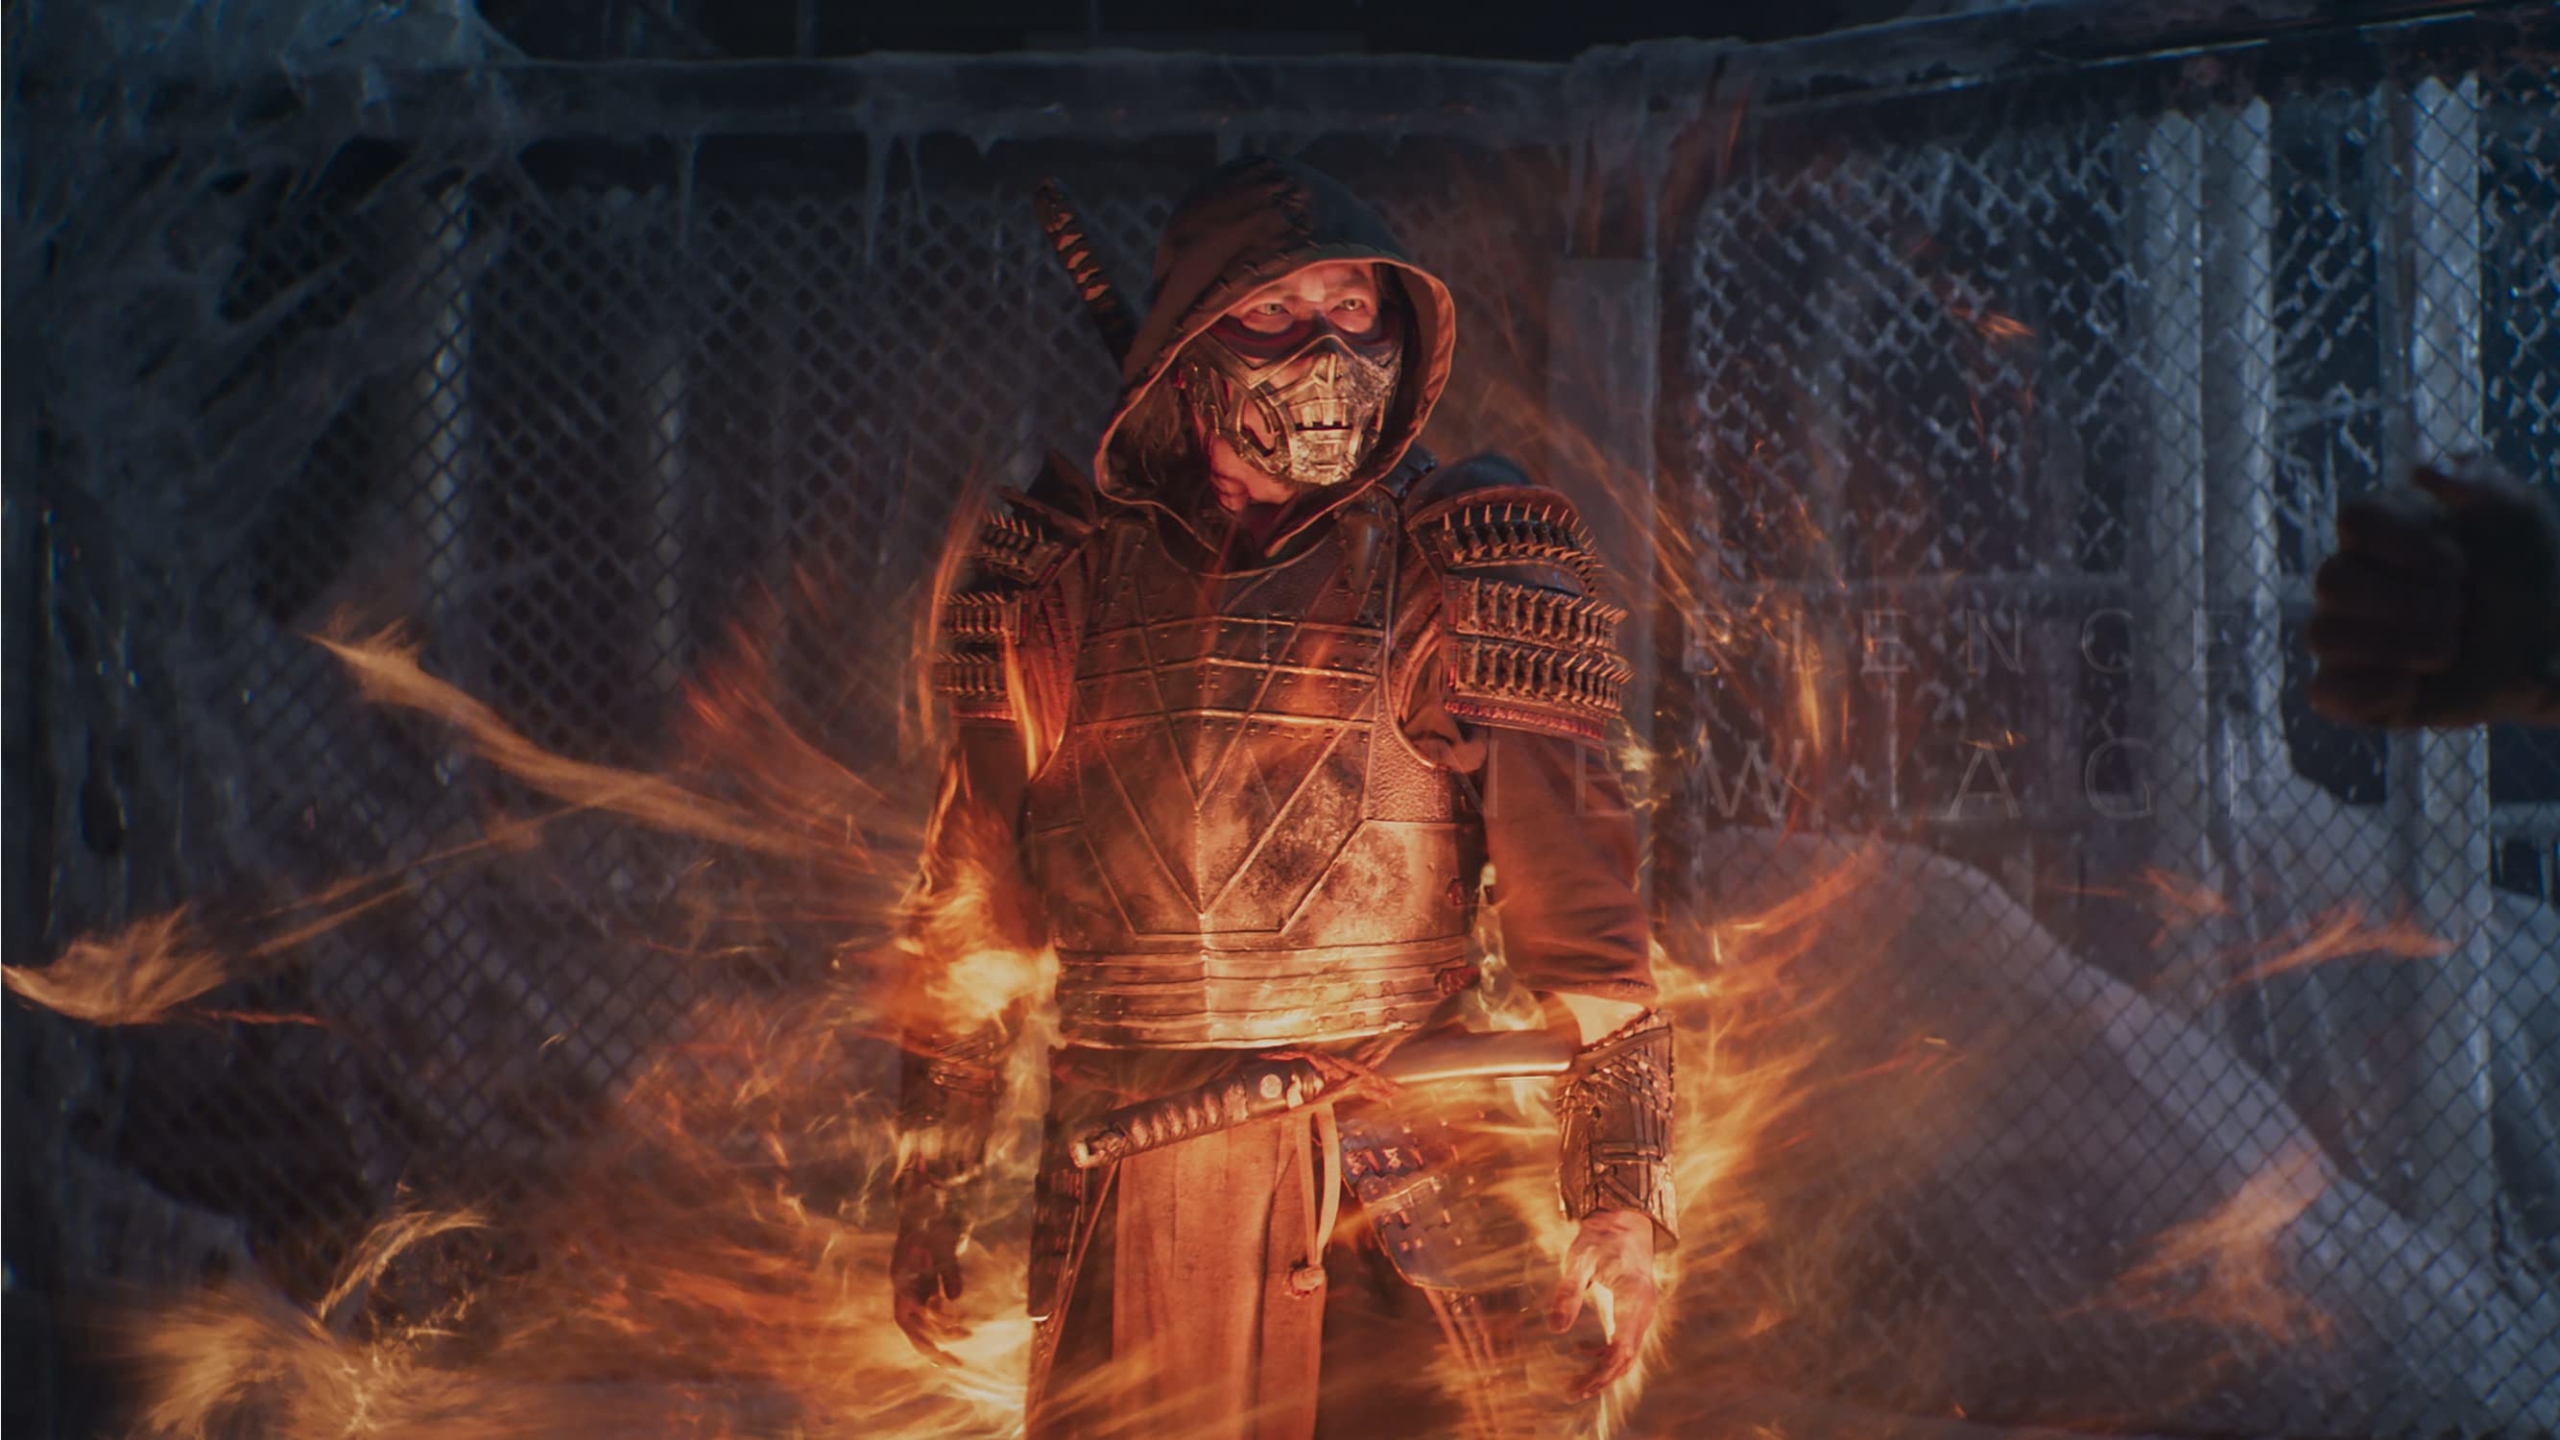 Mortal Kombat star Josh Lawson puts his spin on Kano for 2021 reboot